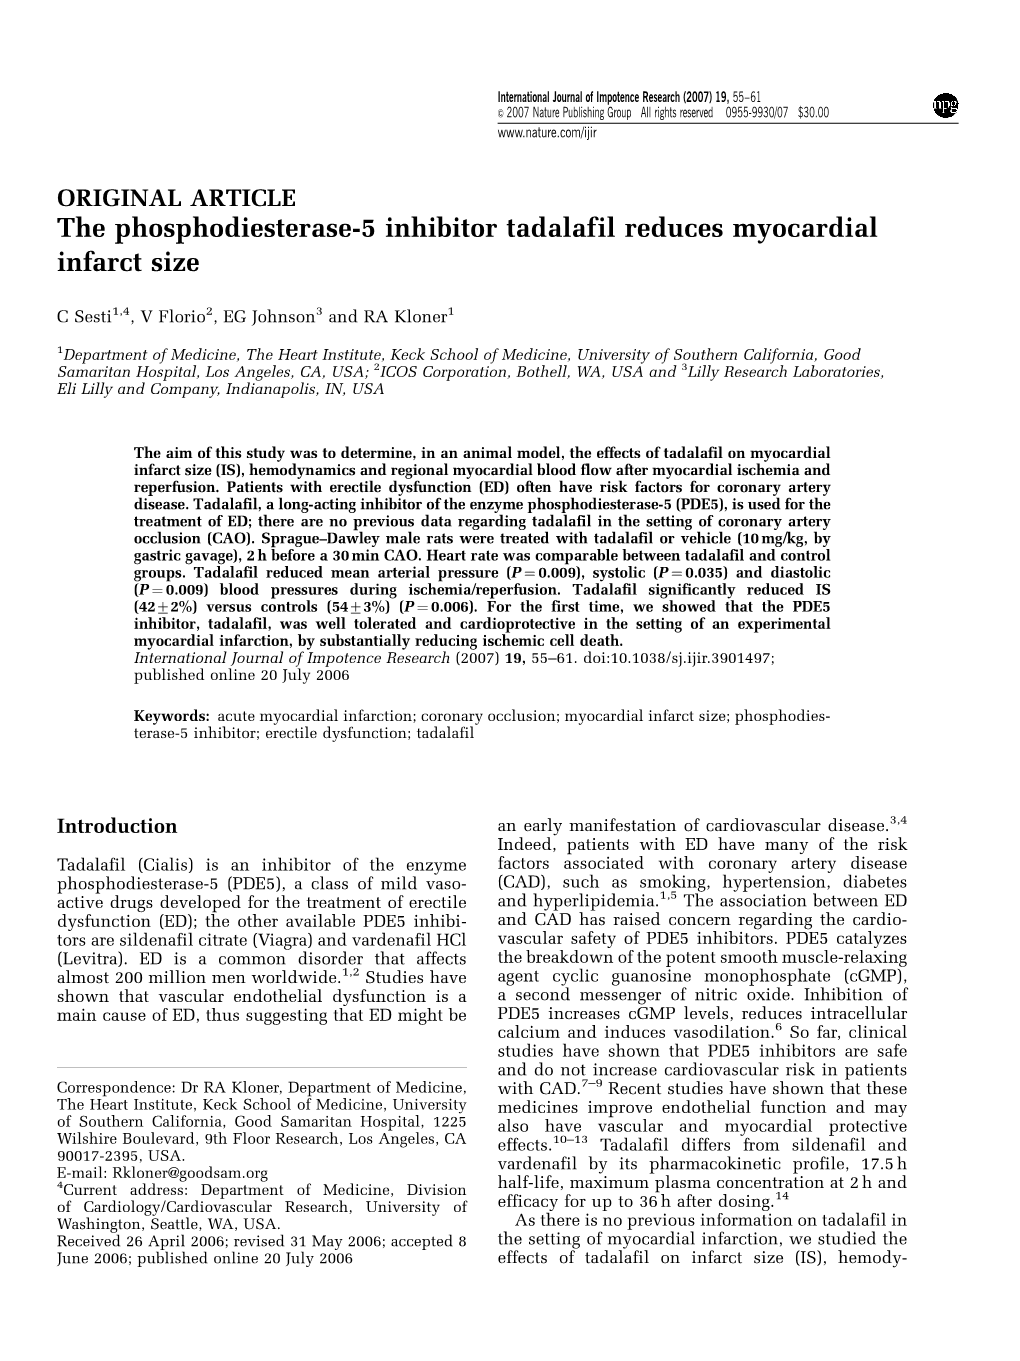 The Phosphodiesterase-5 Inhibitor Tadalafil Reduces Myocardial Infarct Size